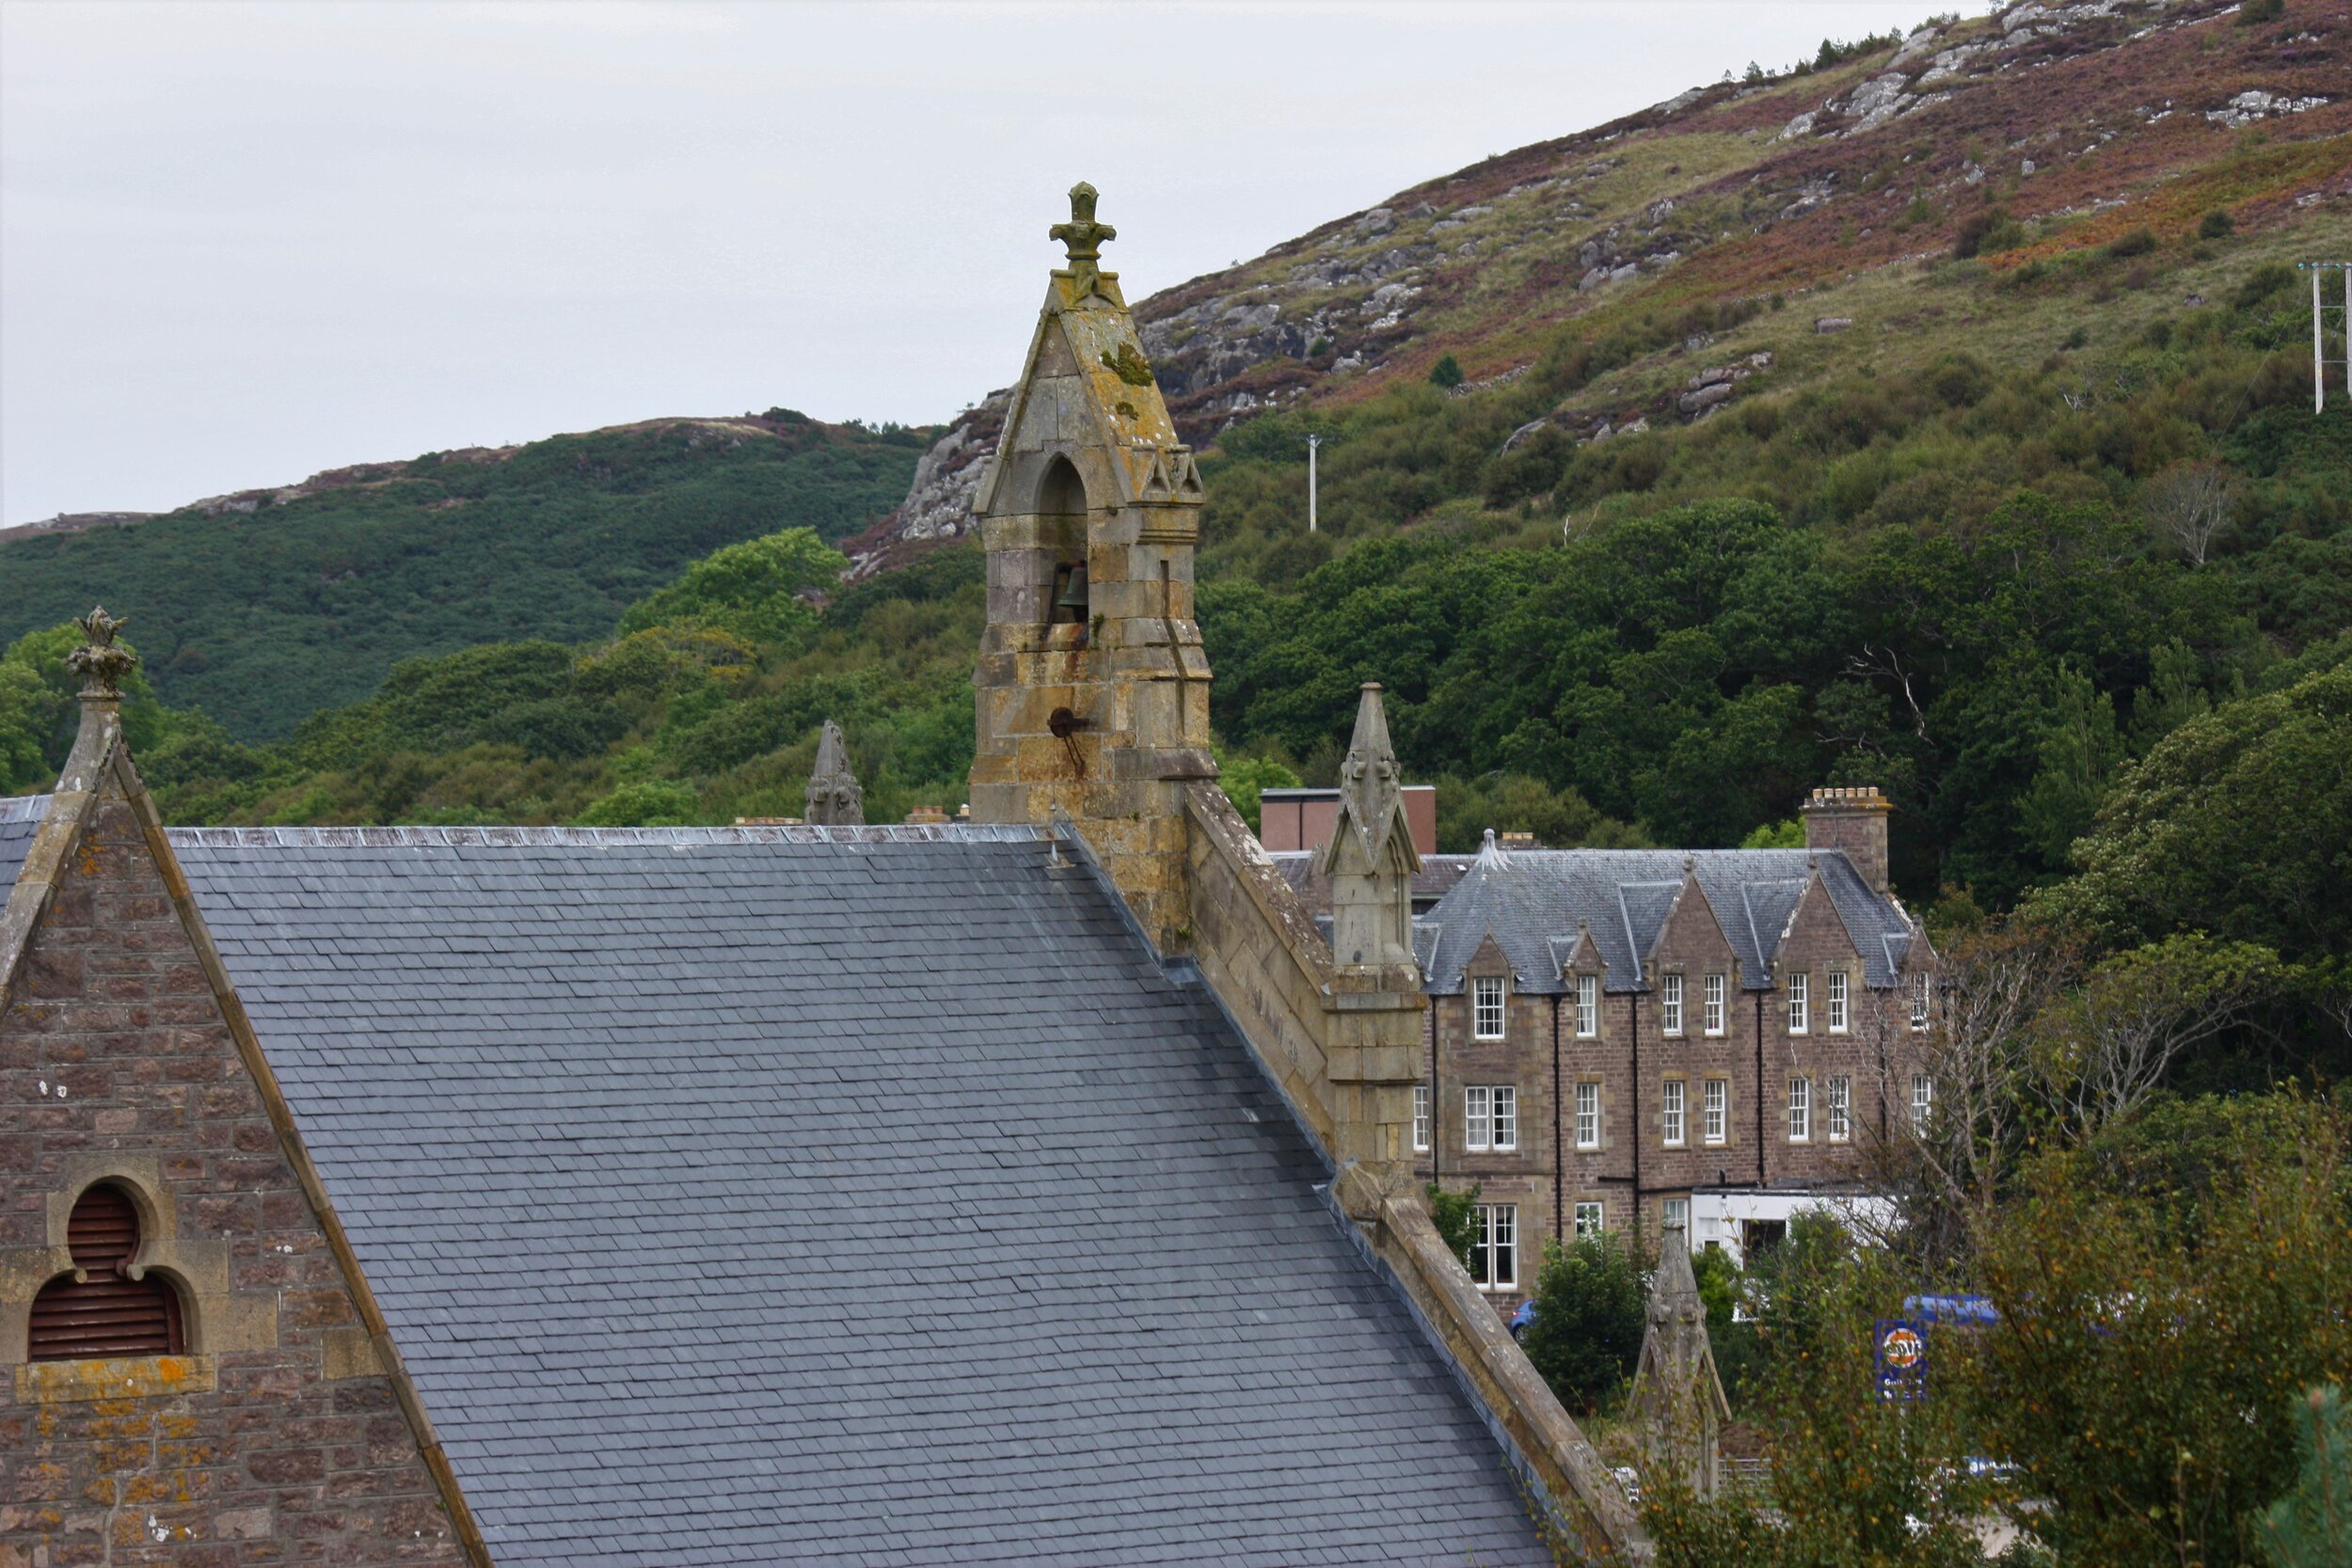 Rooftops. Gairloch, Scotland.